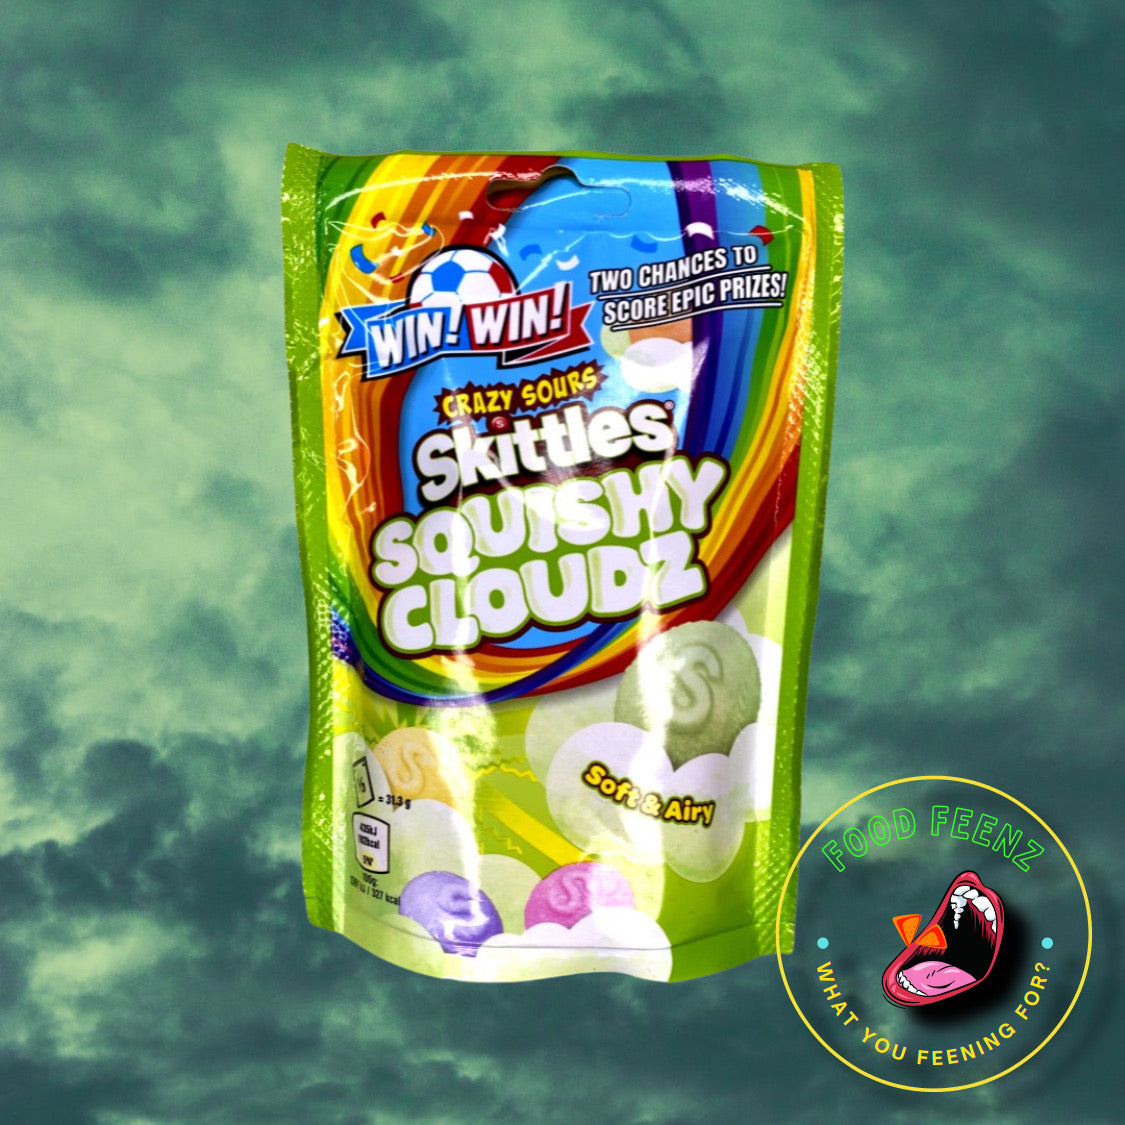 Sour Skittles Squishy Cloudz (UK)